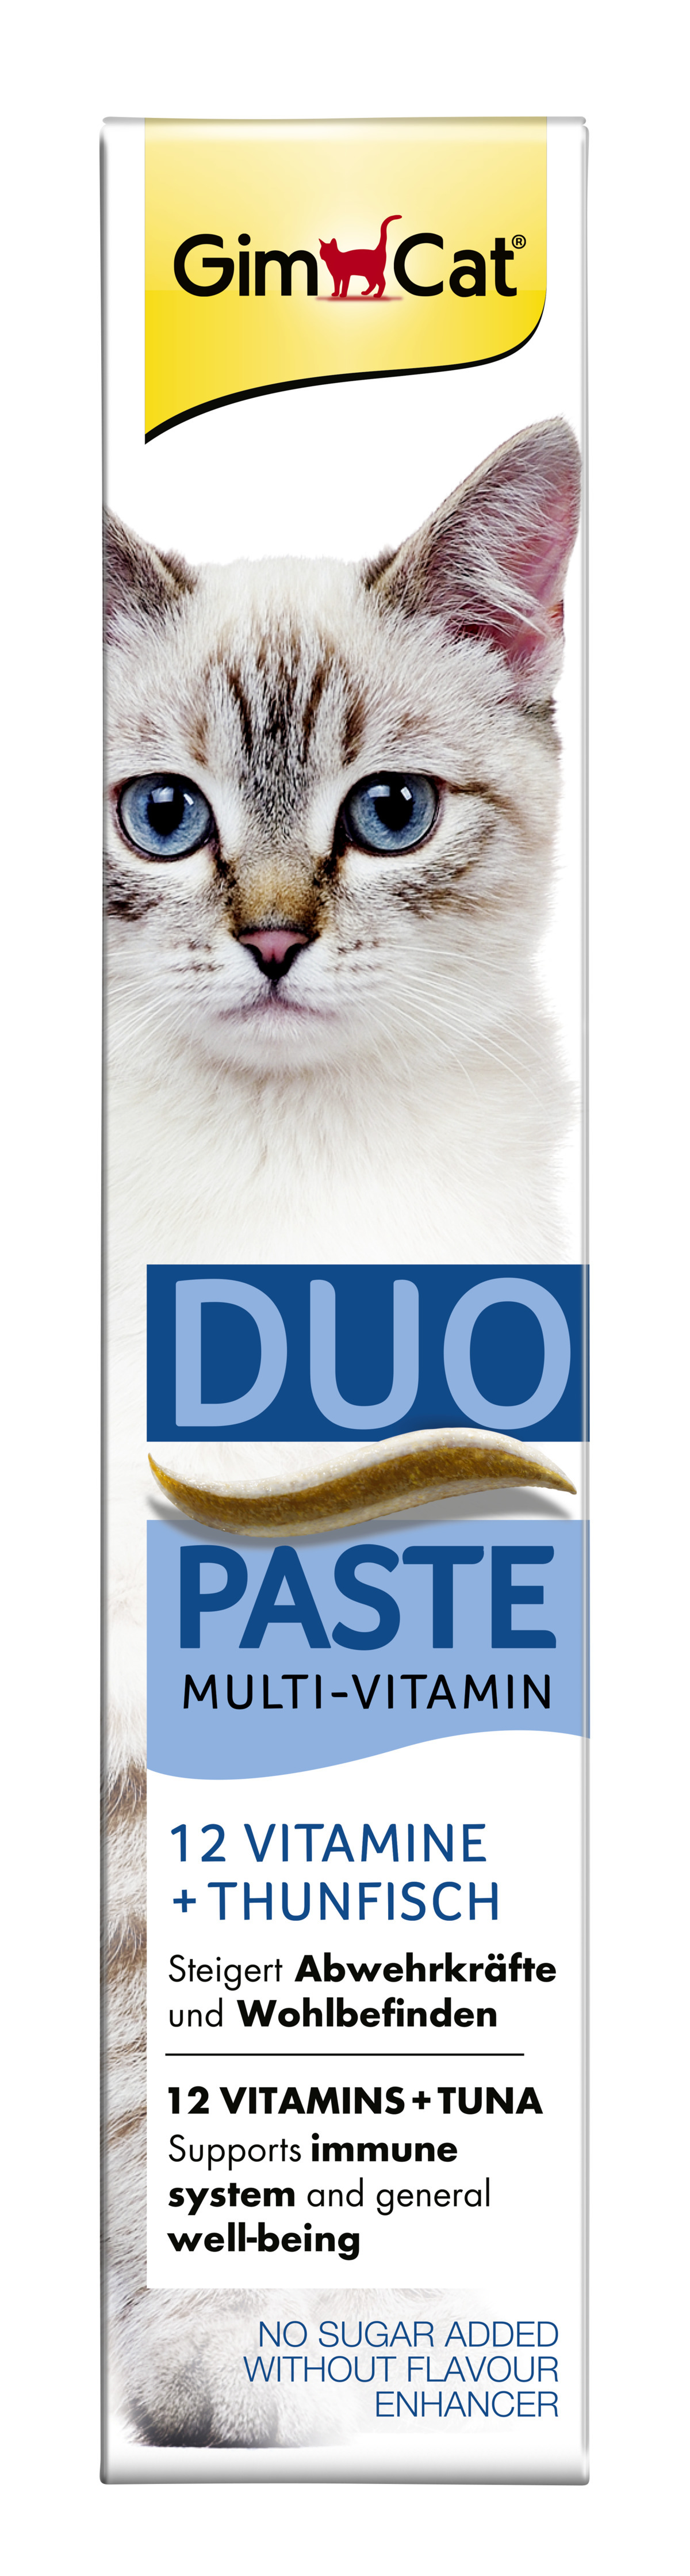 Duo-Paste 2x50g Multi-Vitamin Thunfisch + 12 Vitamine